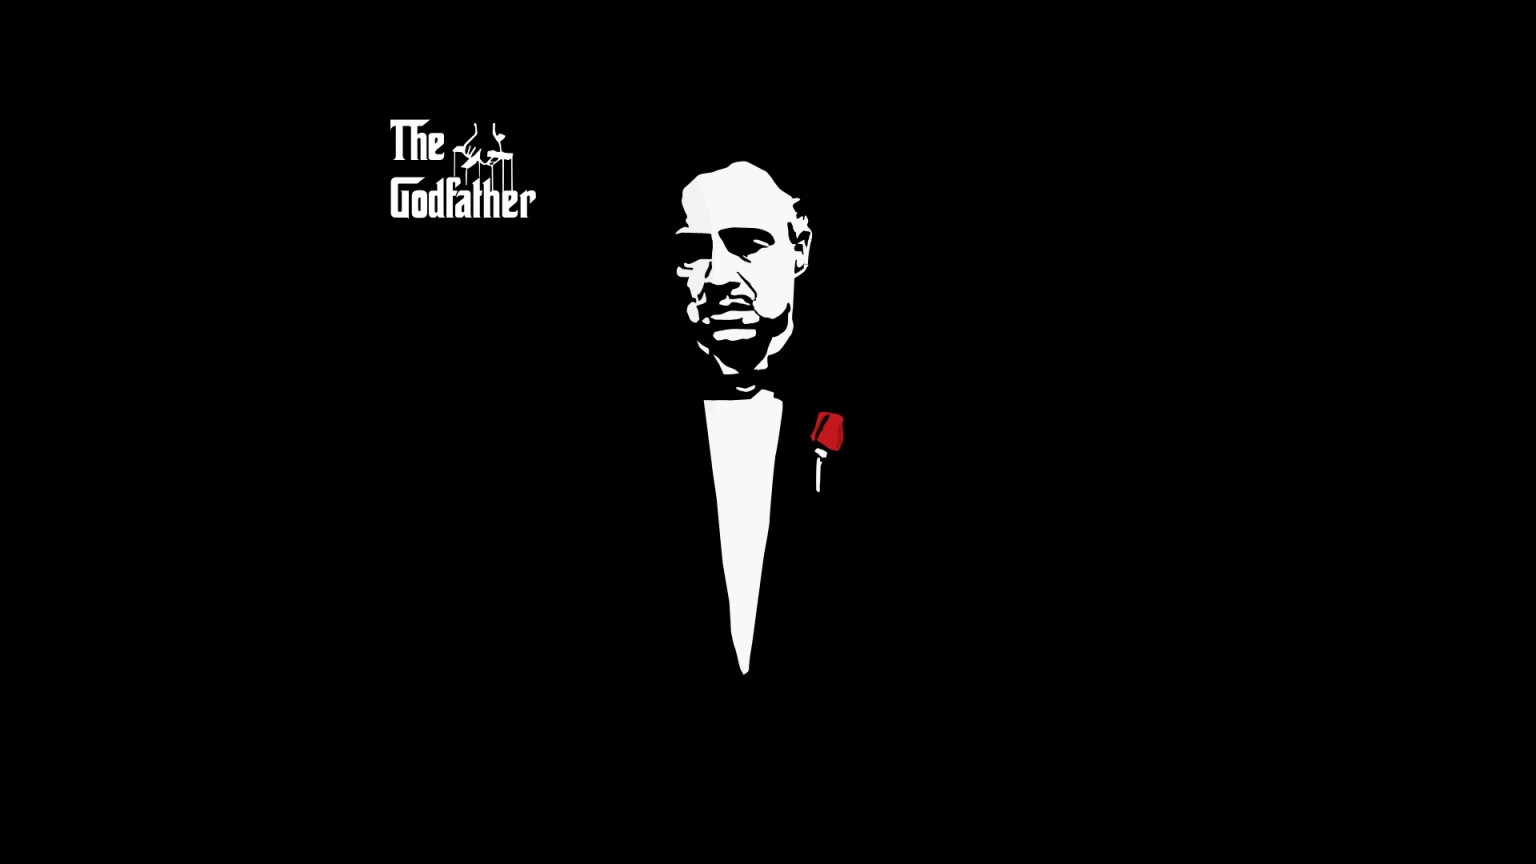 Godfather Fan art for 1536 x 864 HDTV resolution